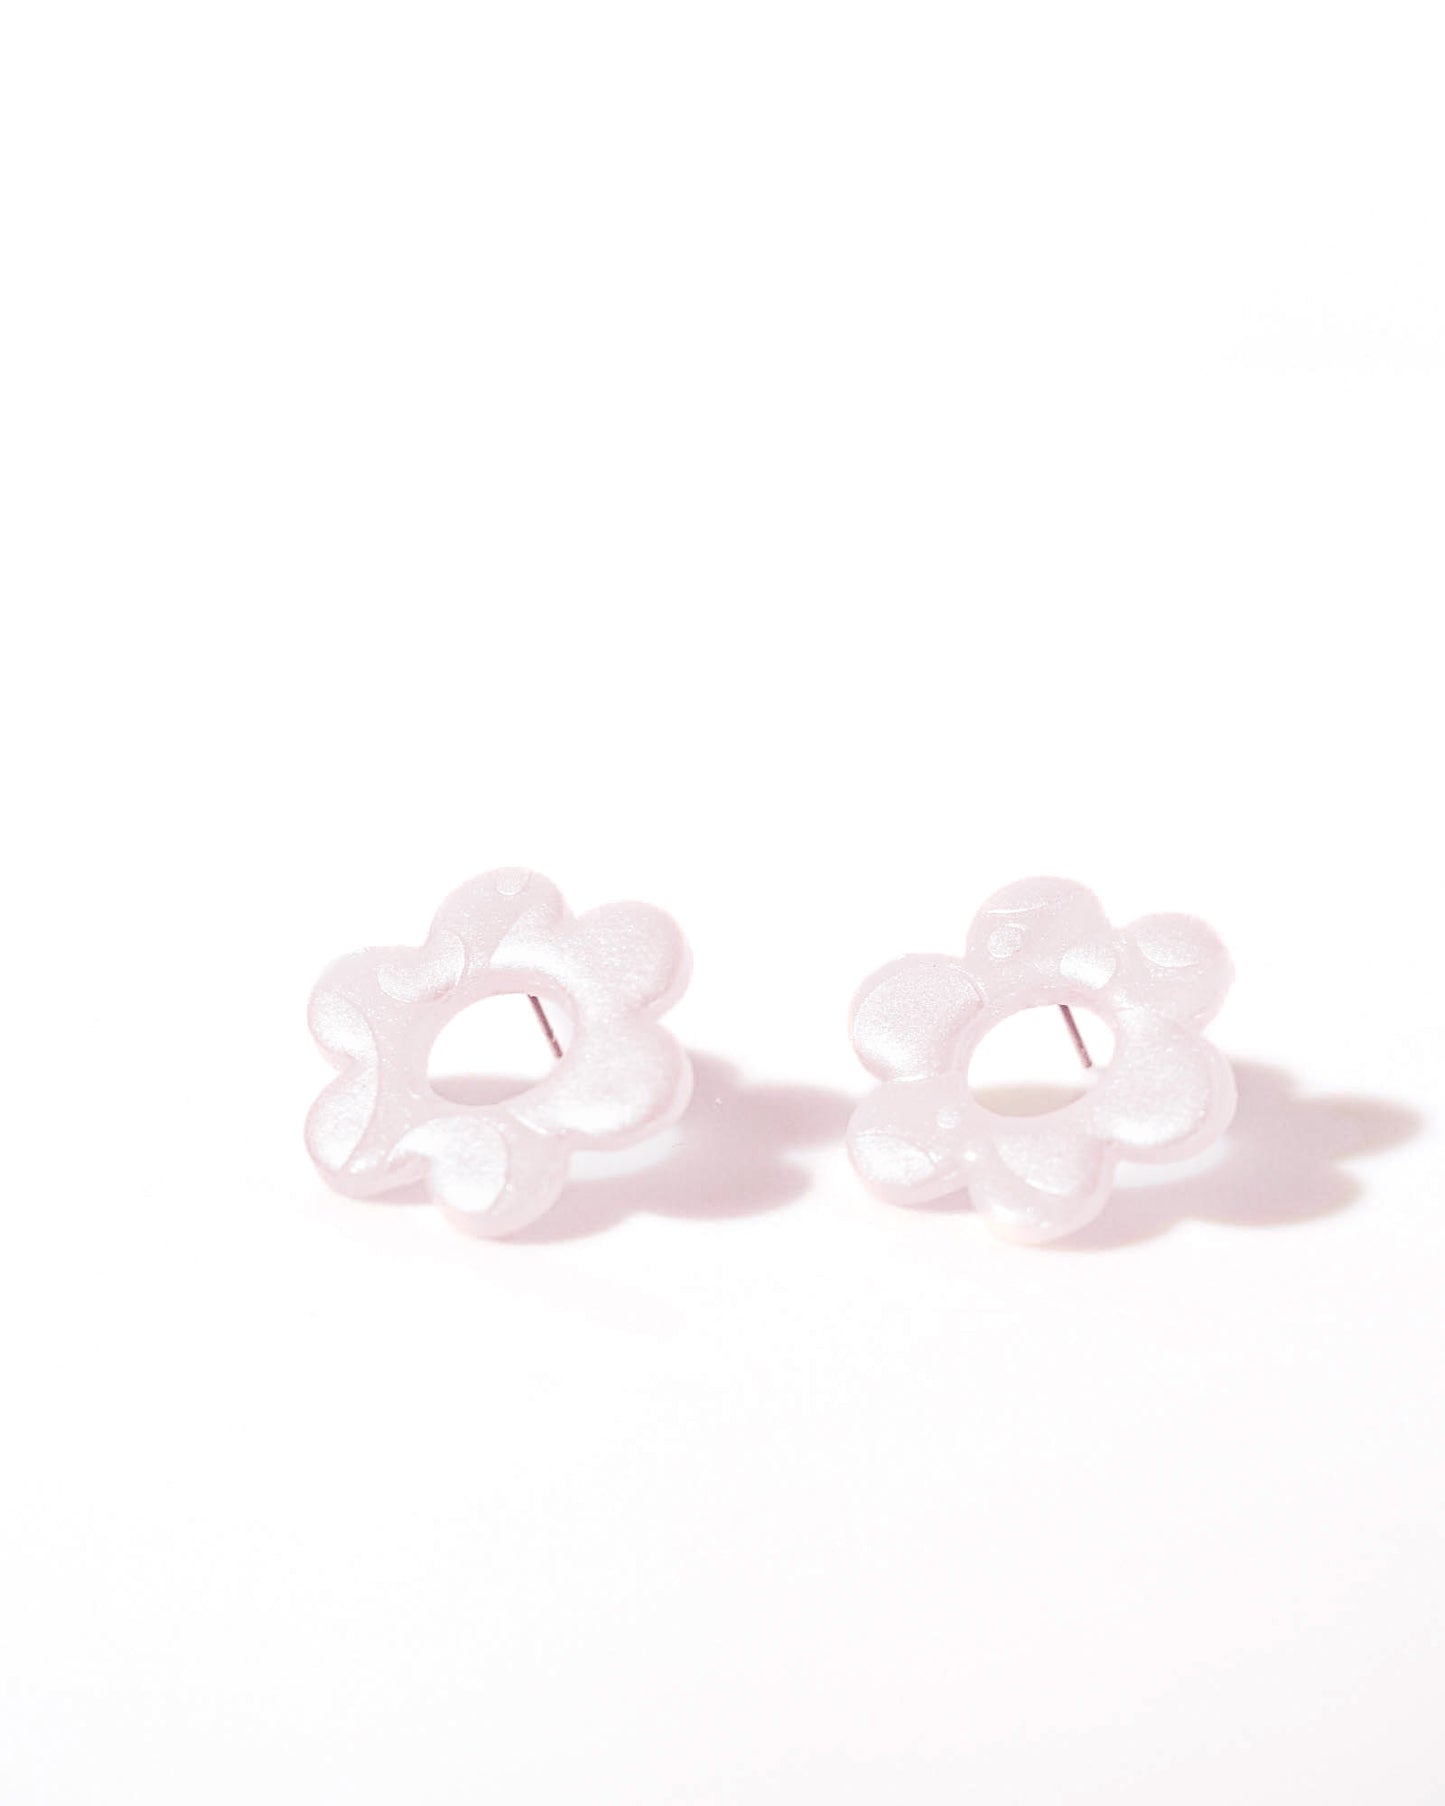 Simple Flower 2 Earrings • Modern earrings • Clay earrings • Everyday earrings